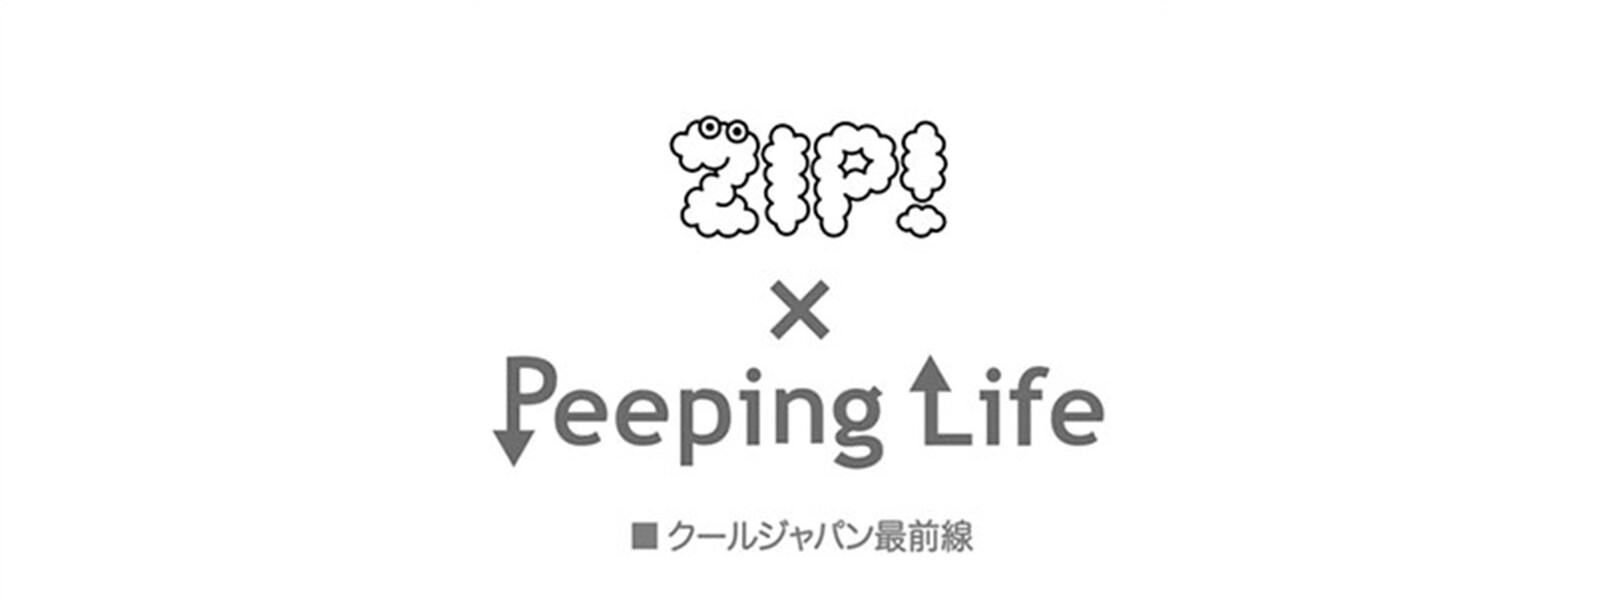 ZIP!×Peeping Life TV クールジャパン最前線の動画 - 7daysTV × ZIP! かぞくムービー